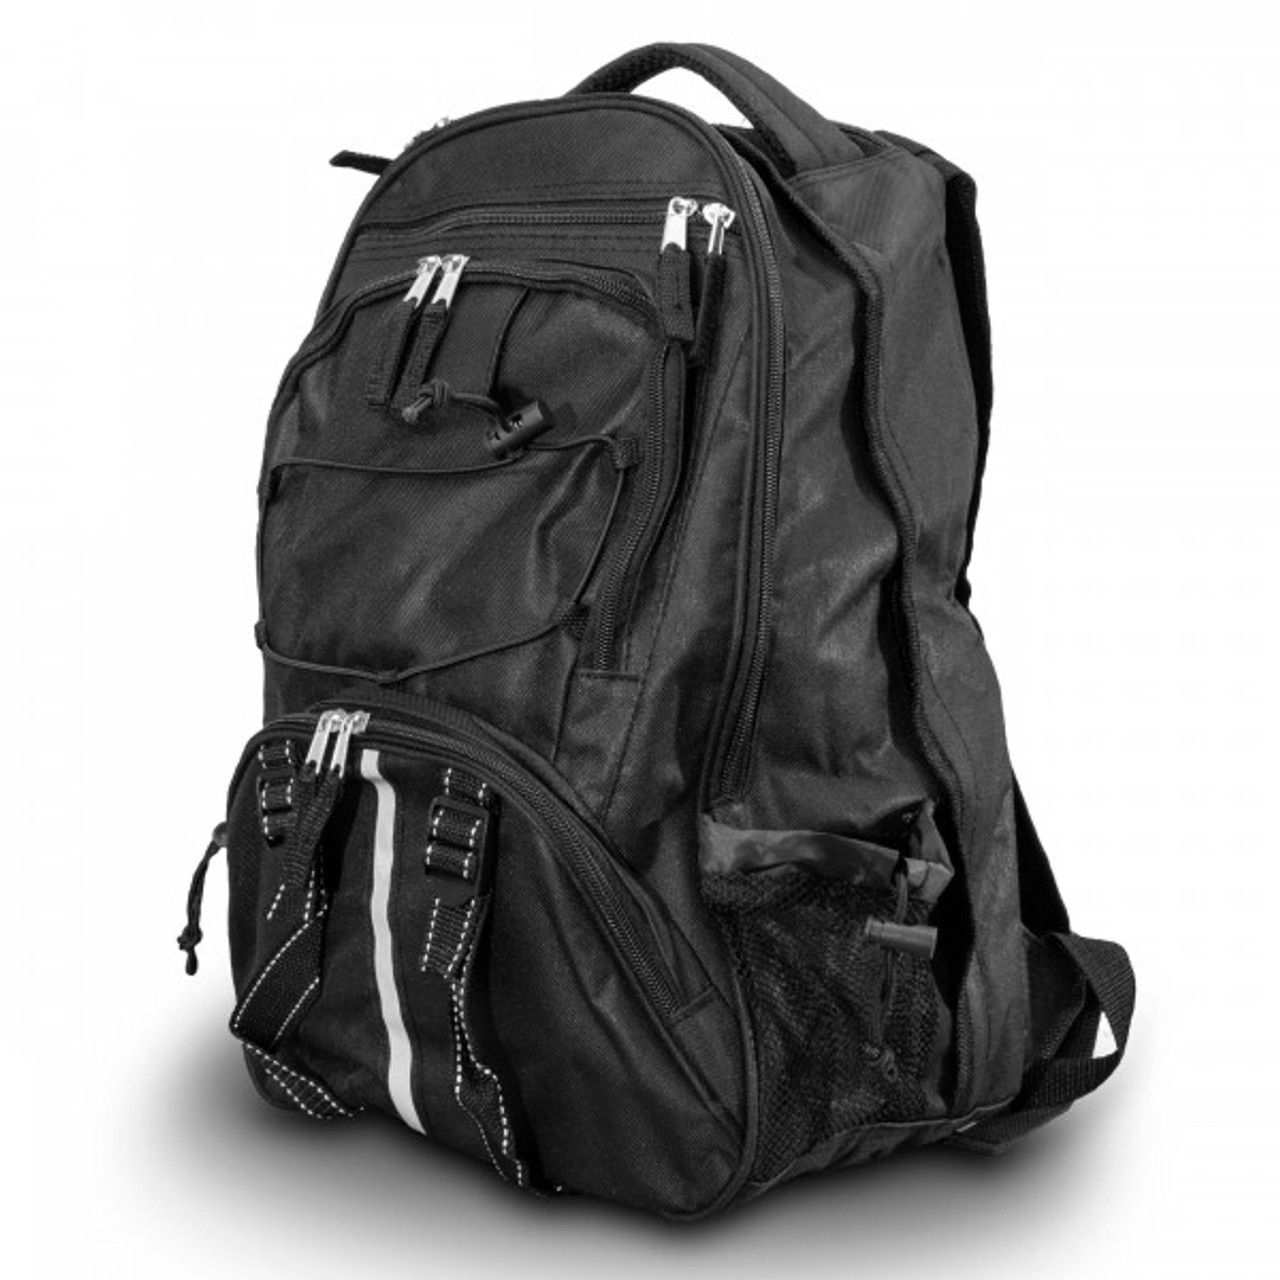 Black 64 Piece Survival Backpack